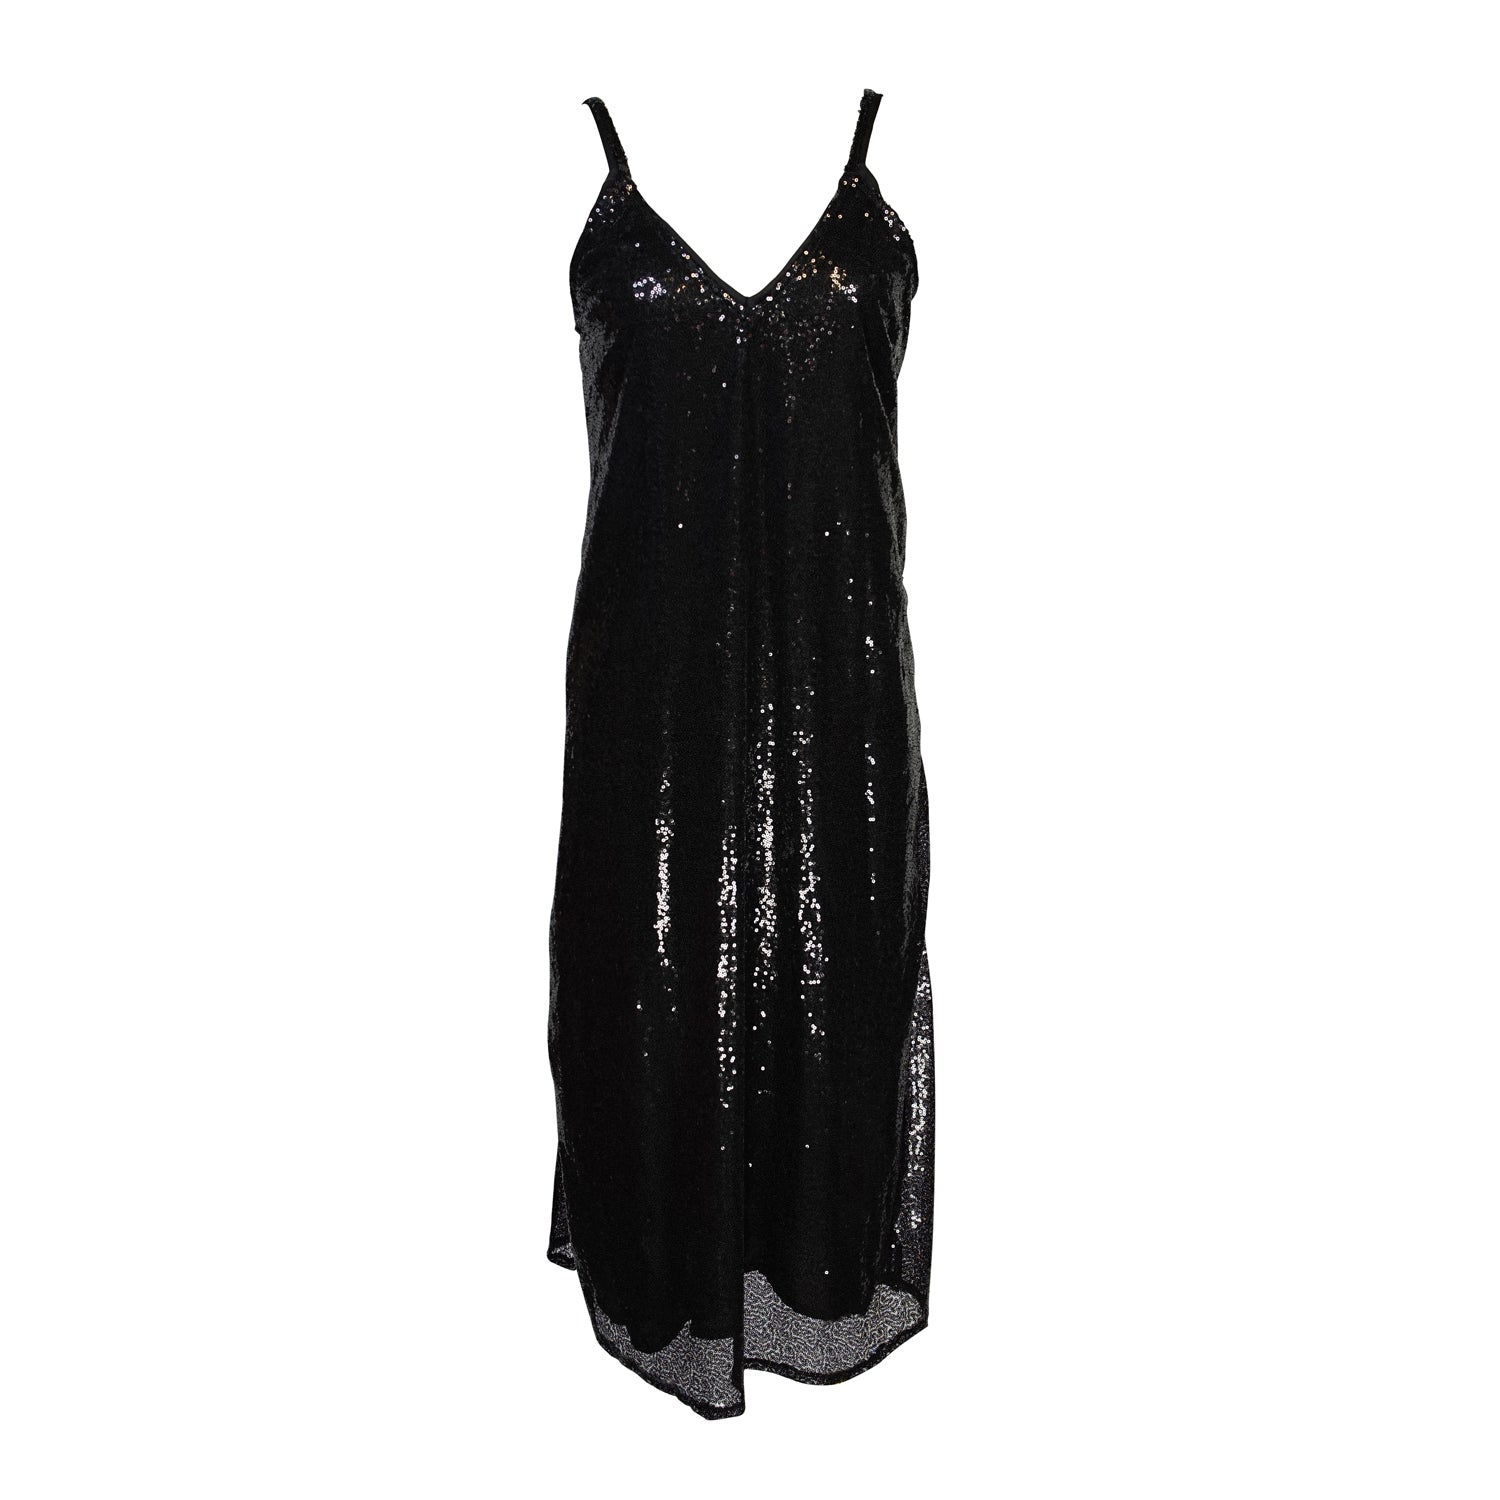 Black sequin layered slip dress featuring spaghetti strap and midi hemline.